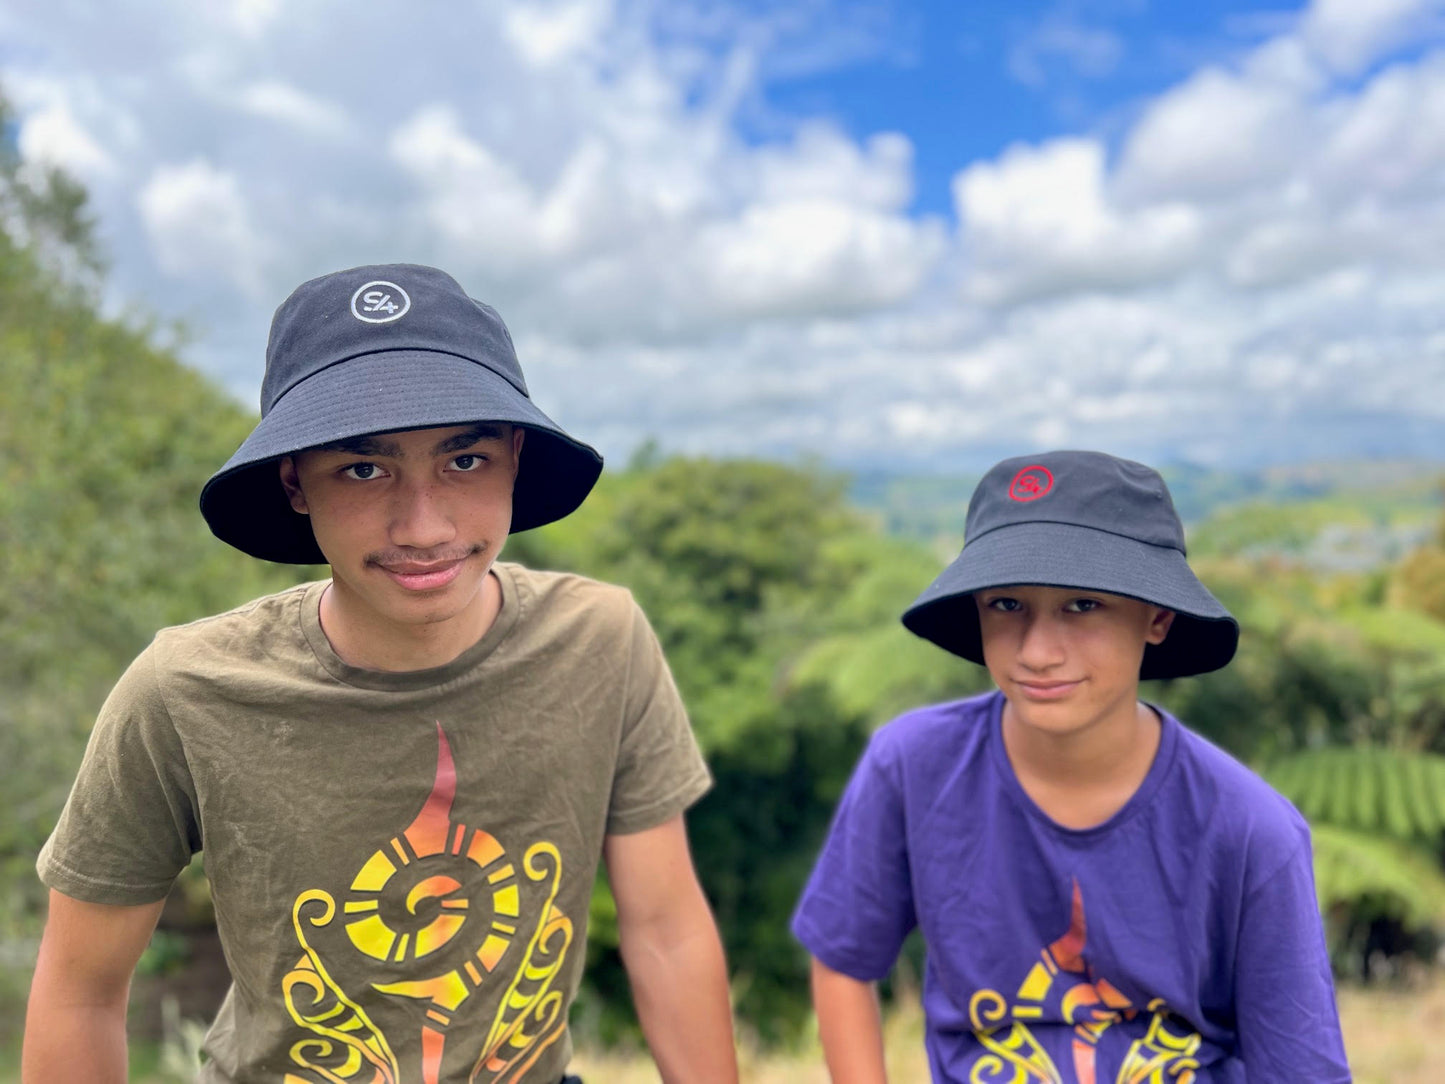 S4 Bucket Hats